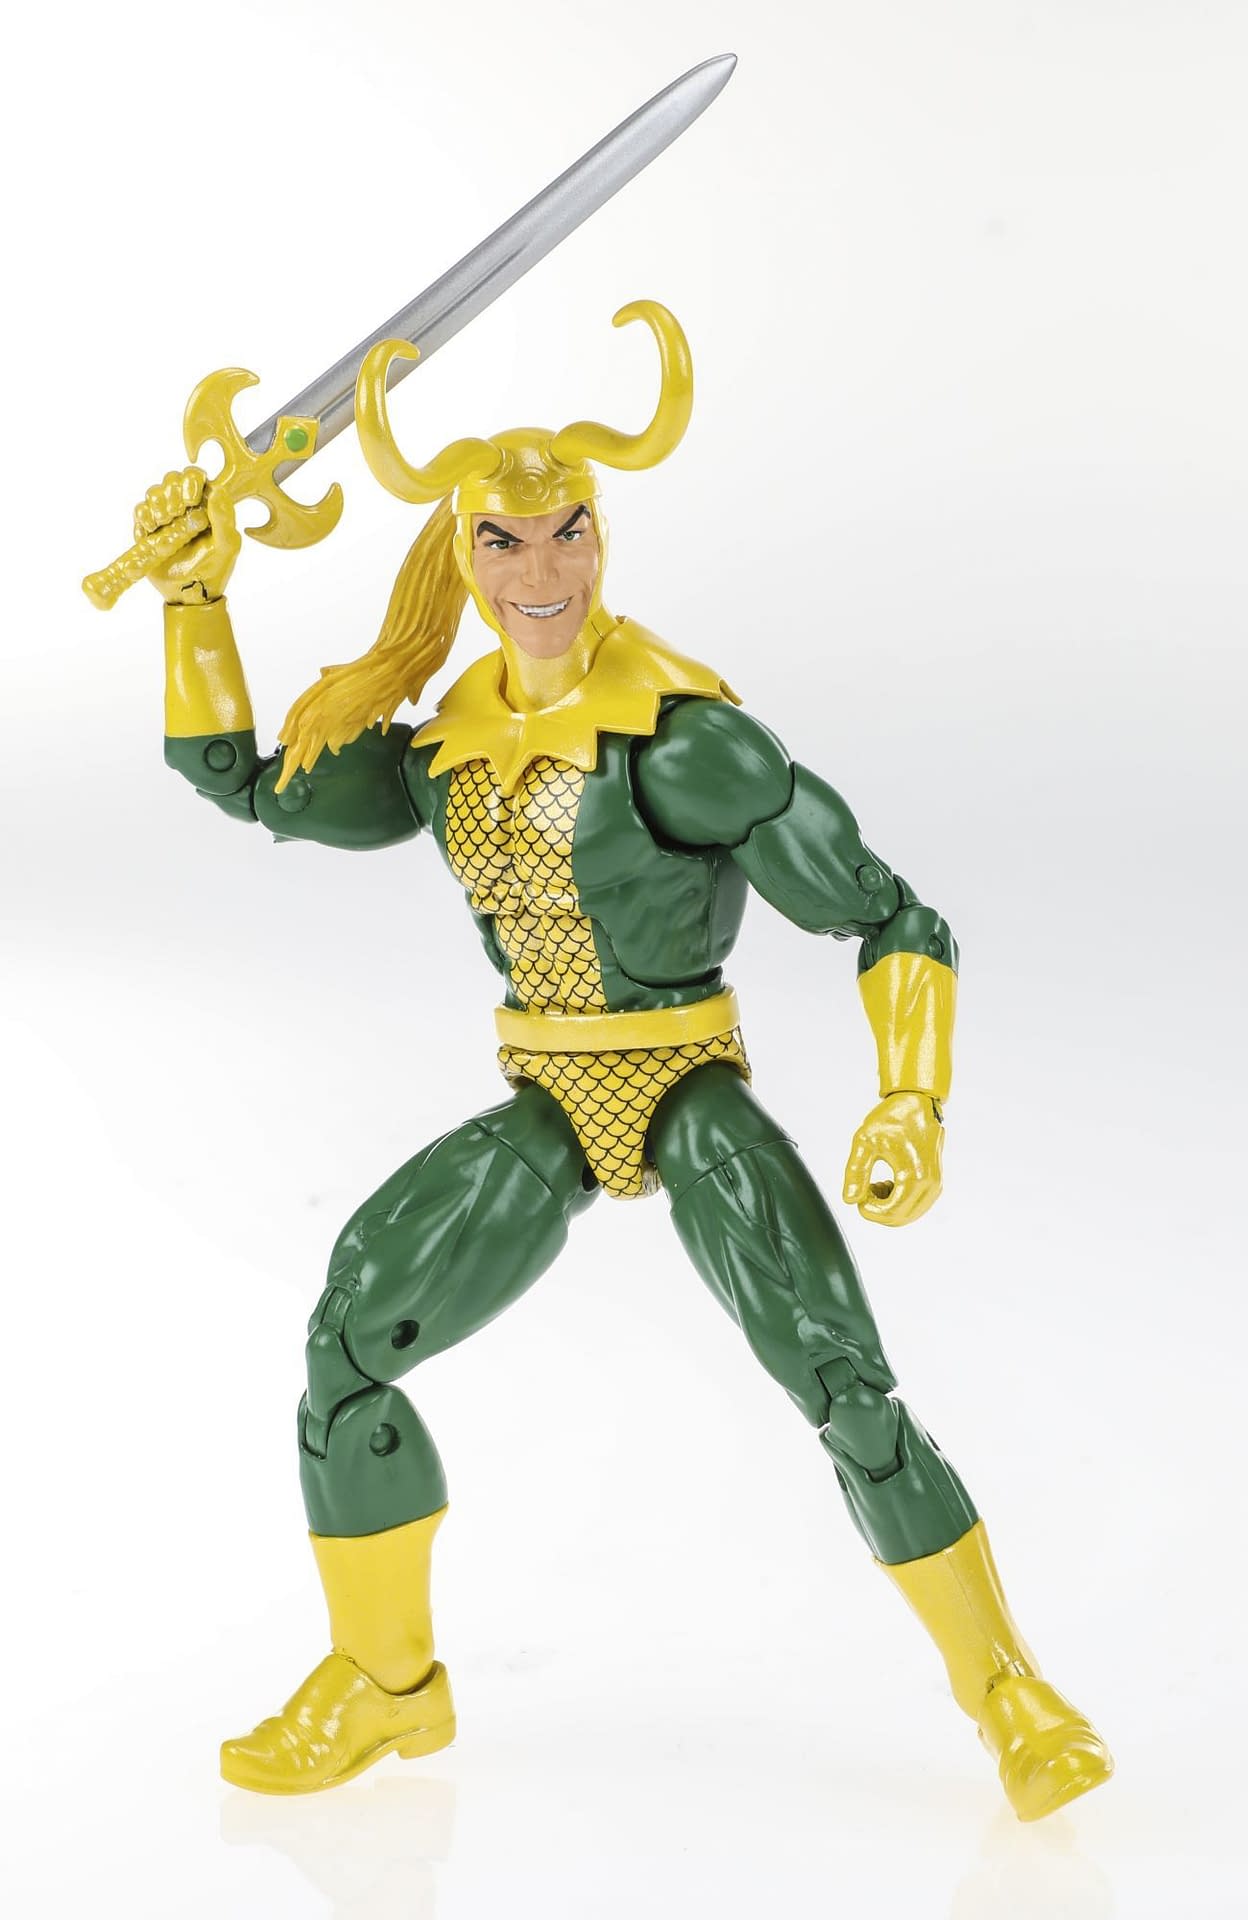 Marvel Legends Series 6-inch Loki Figure (Avengers wave)